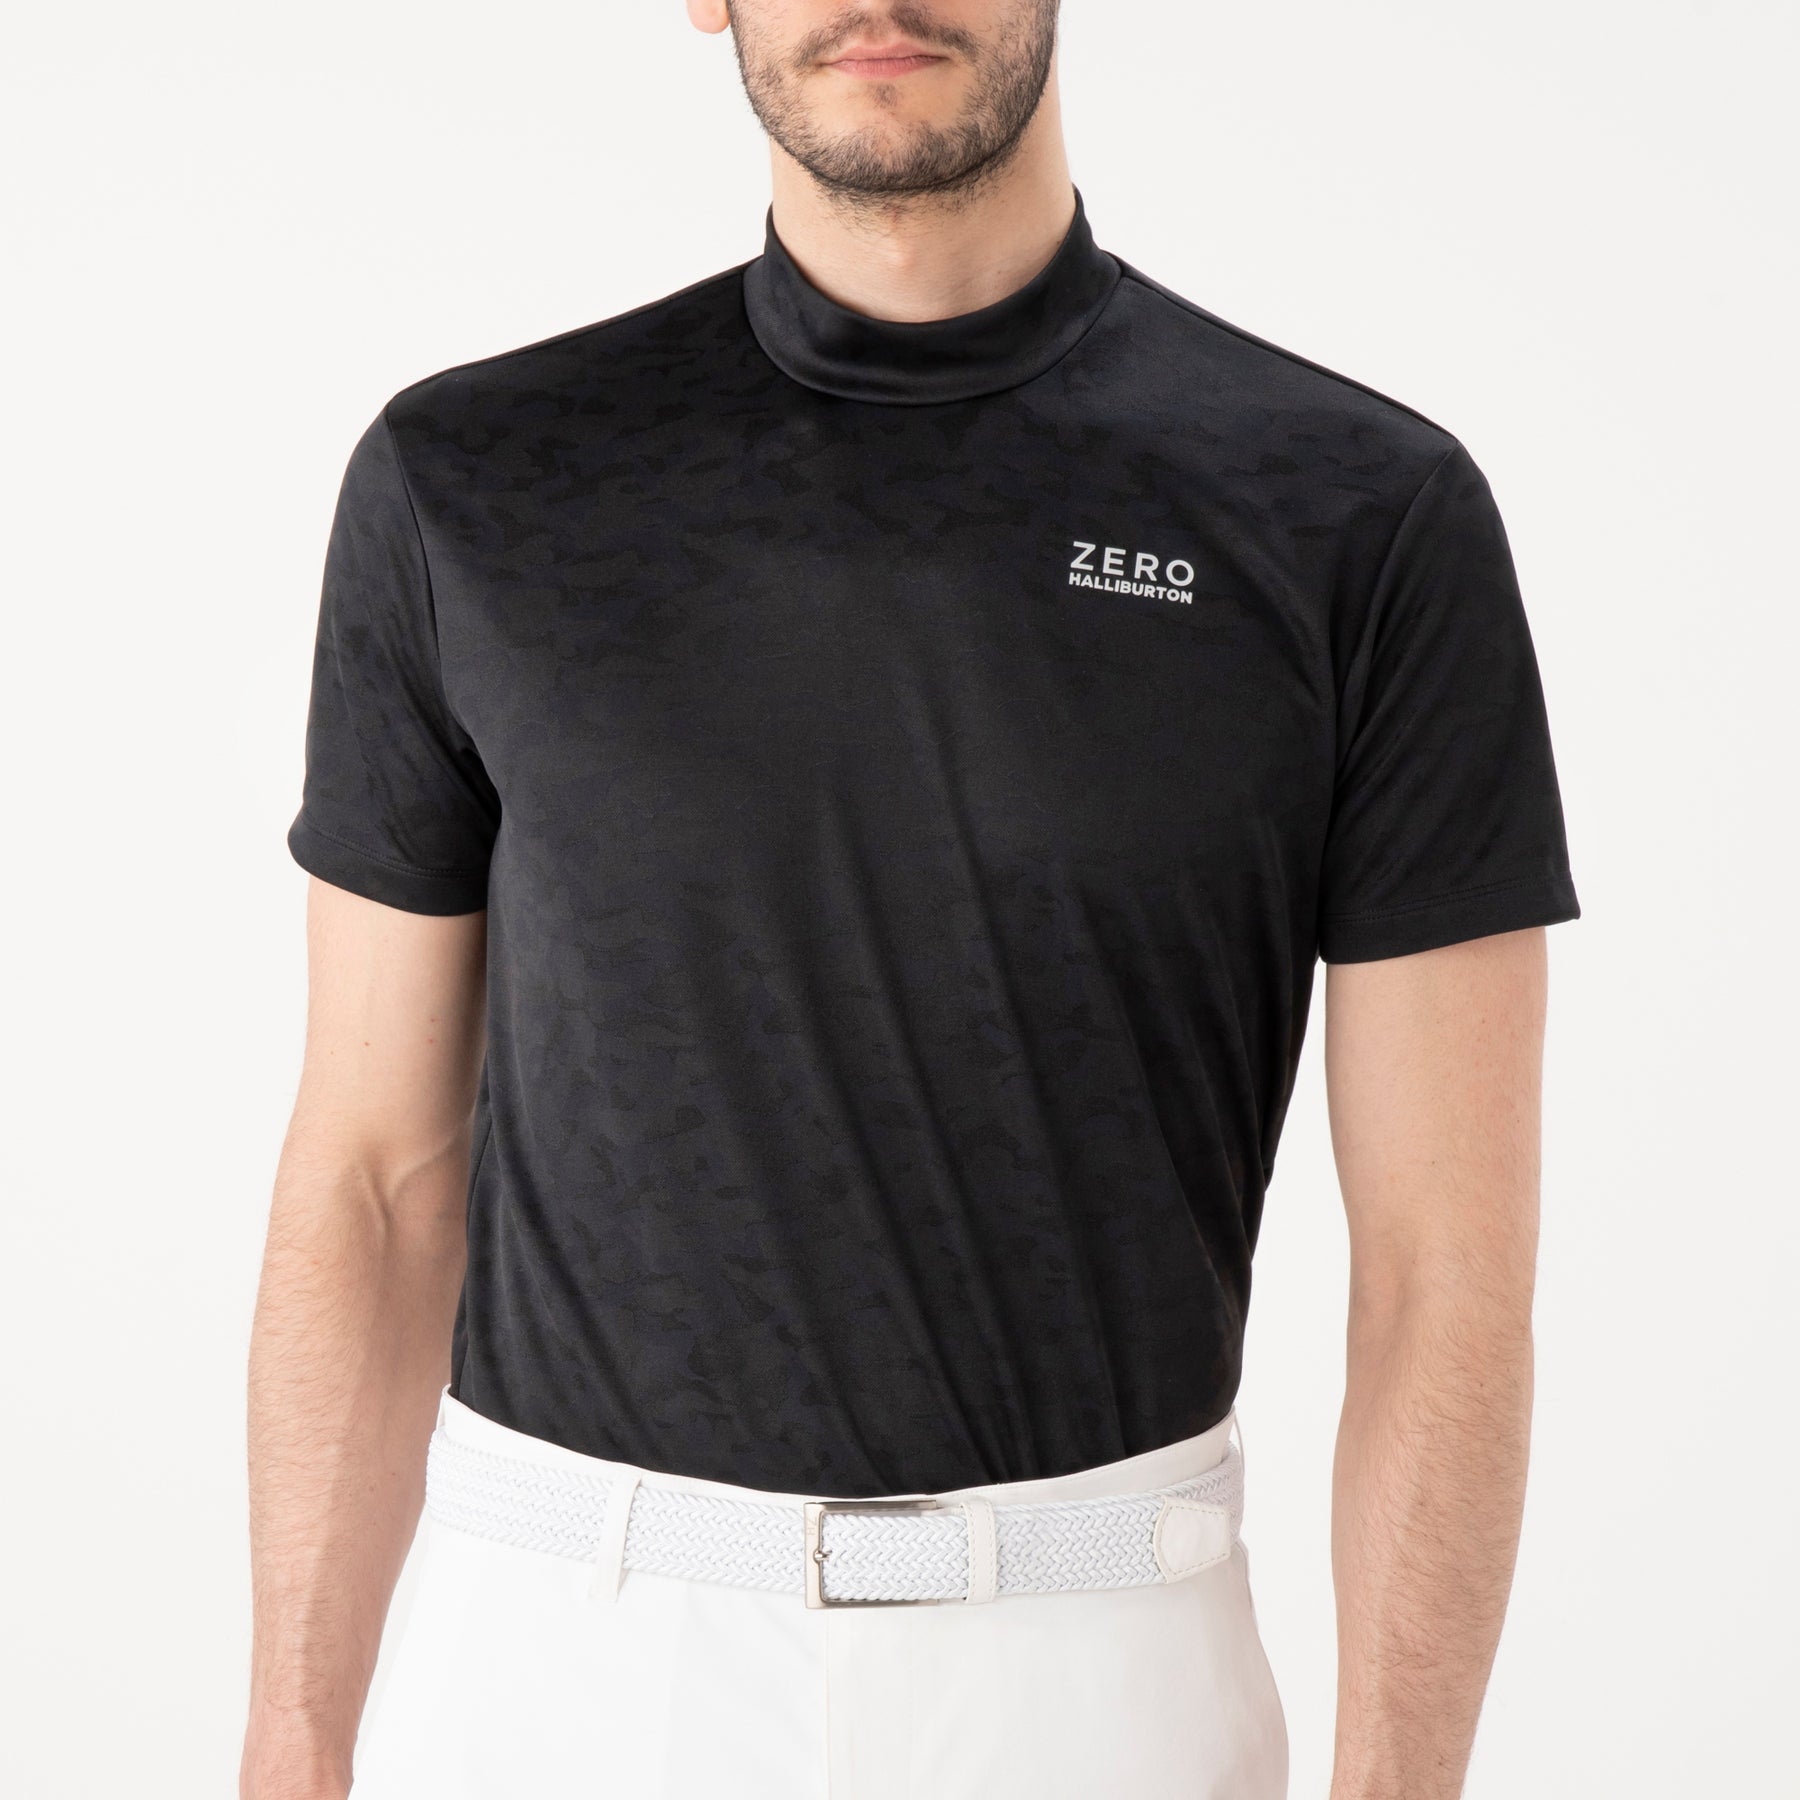 ZHG-A16b | Jacquard Camo Polo Shirt 82637